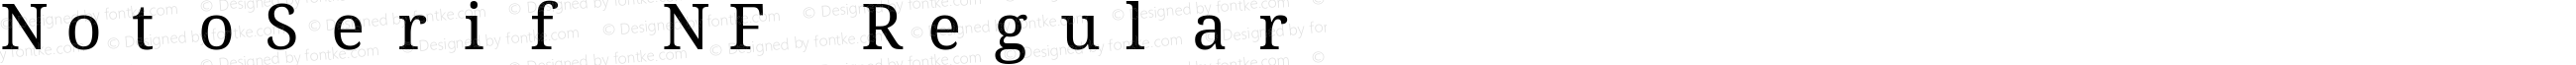 Noto Serif Regular Nerd Font Complete Mono Windows Compatible